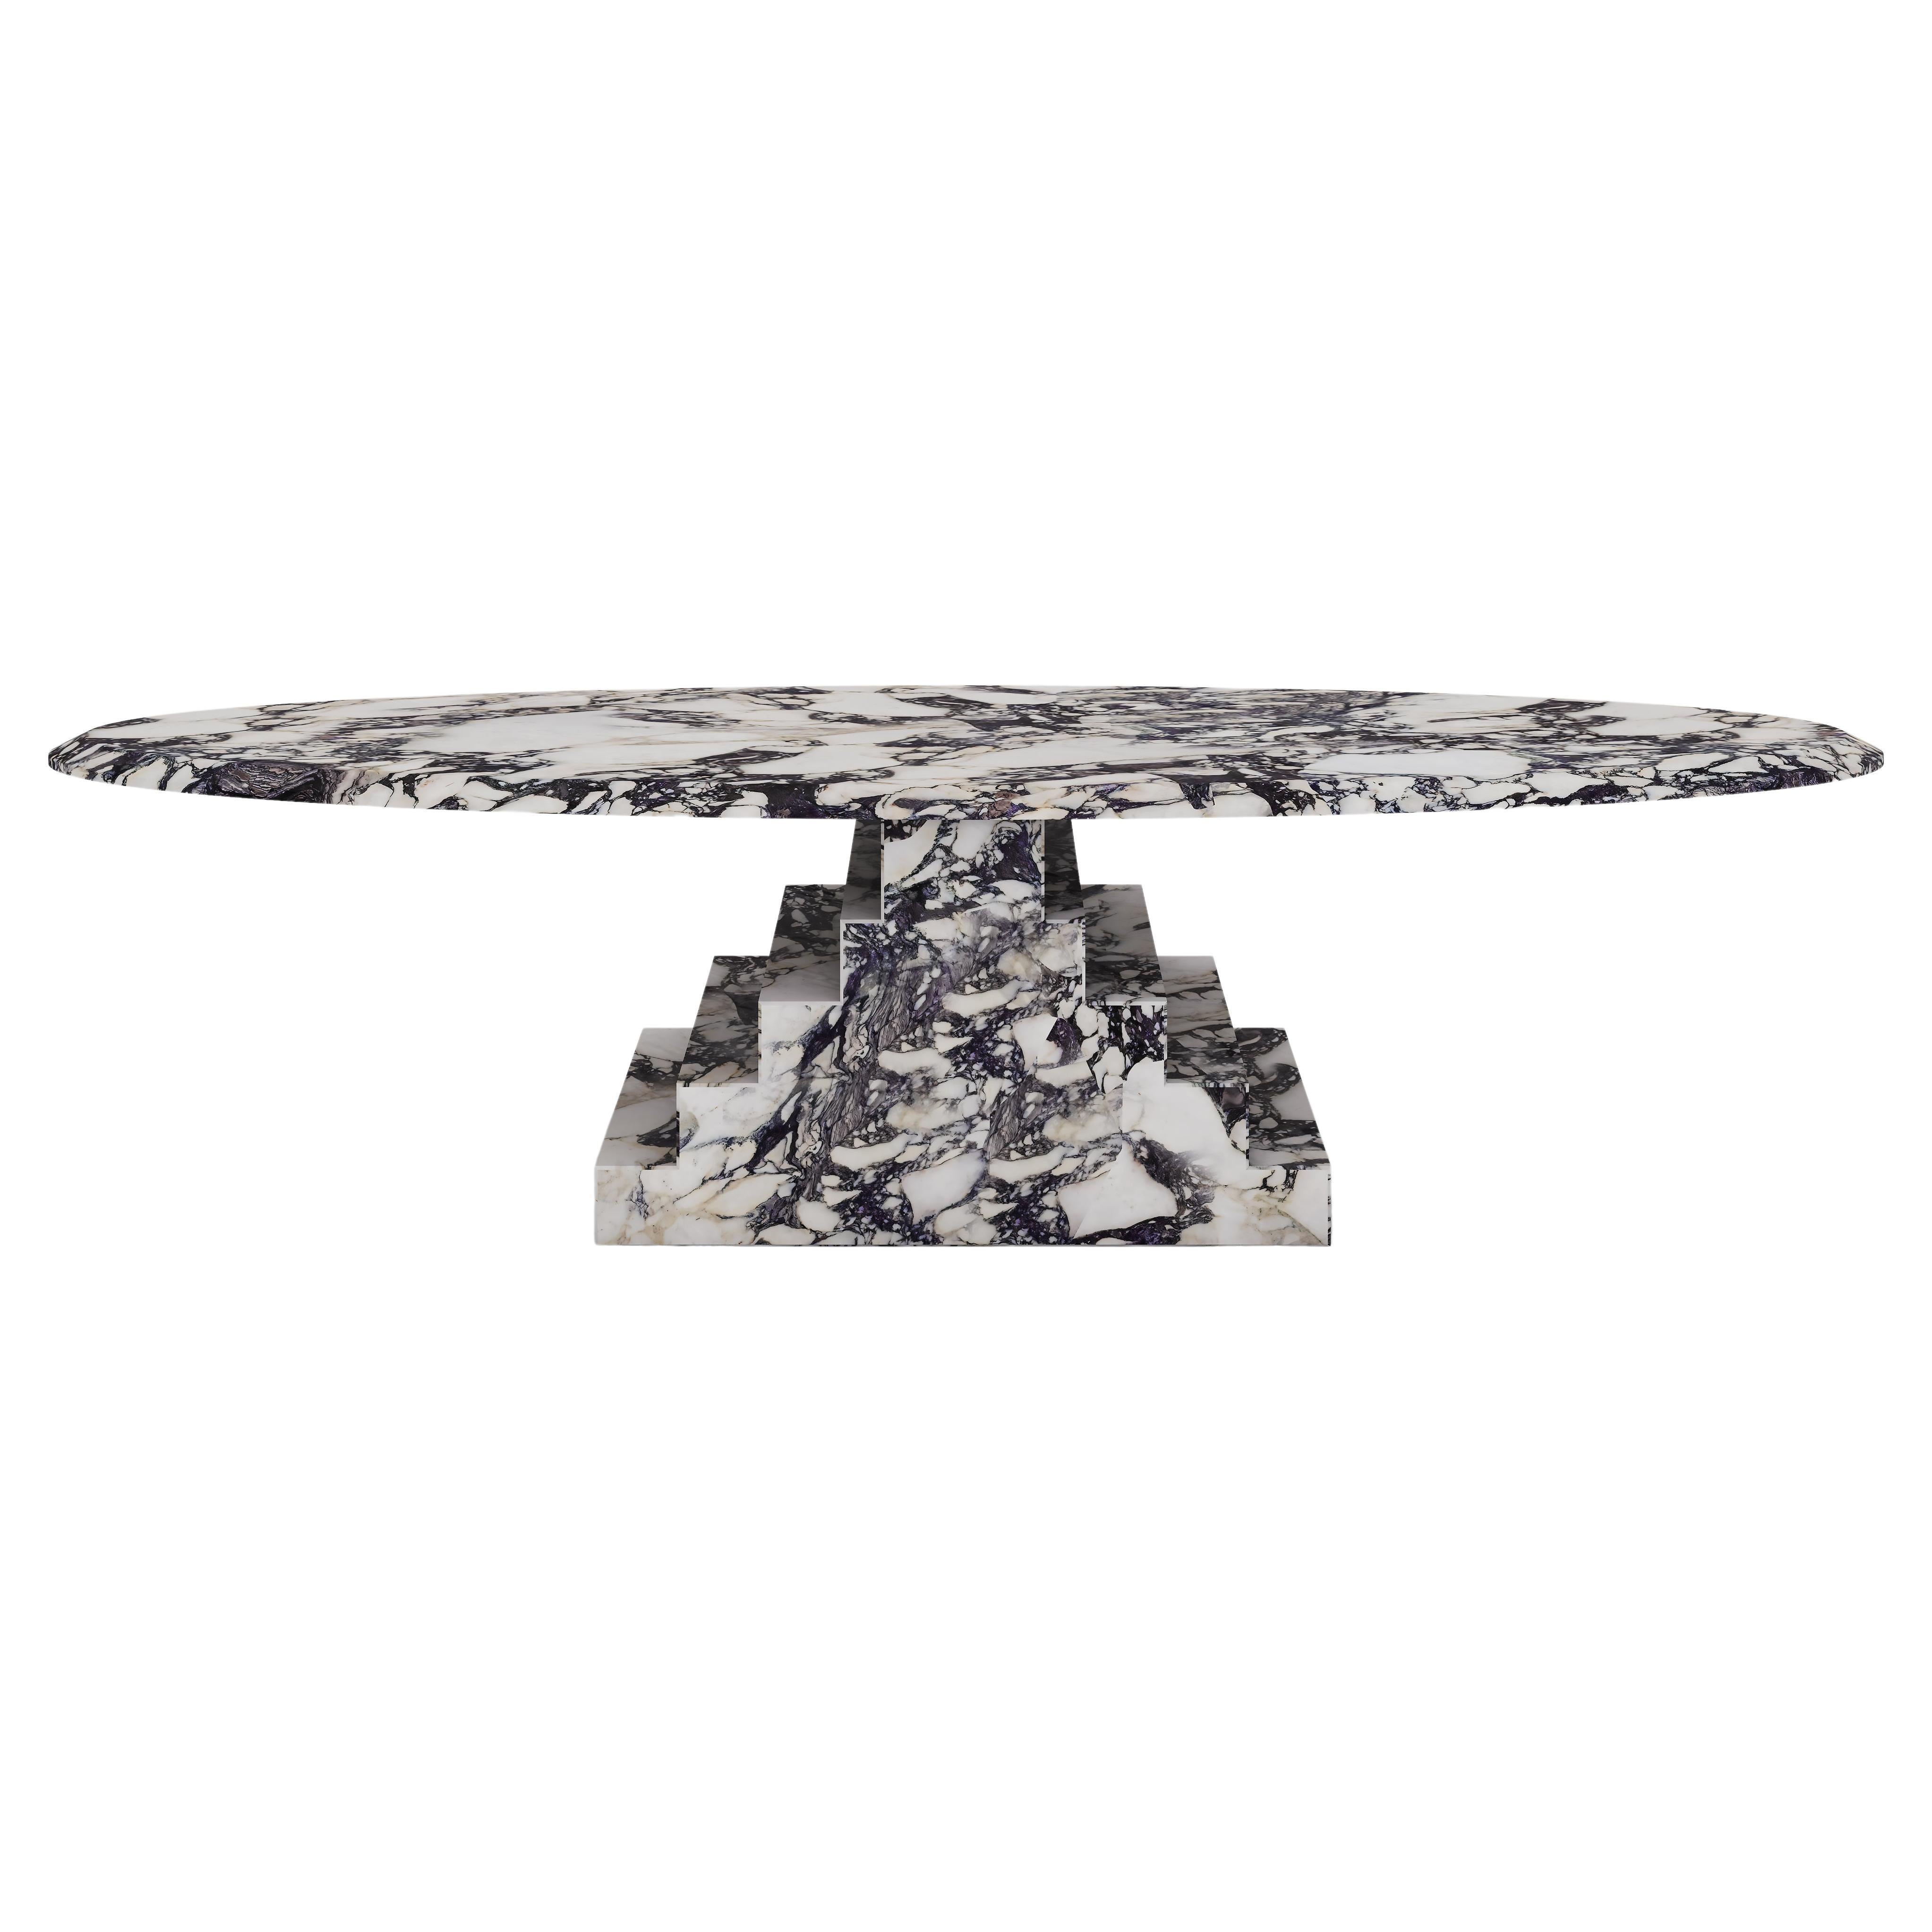  Table basse NORDST NIKO, marbre italien Calacatta, design moderne danois, nouveau en vente